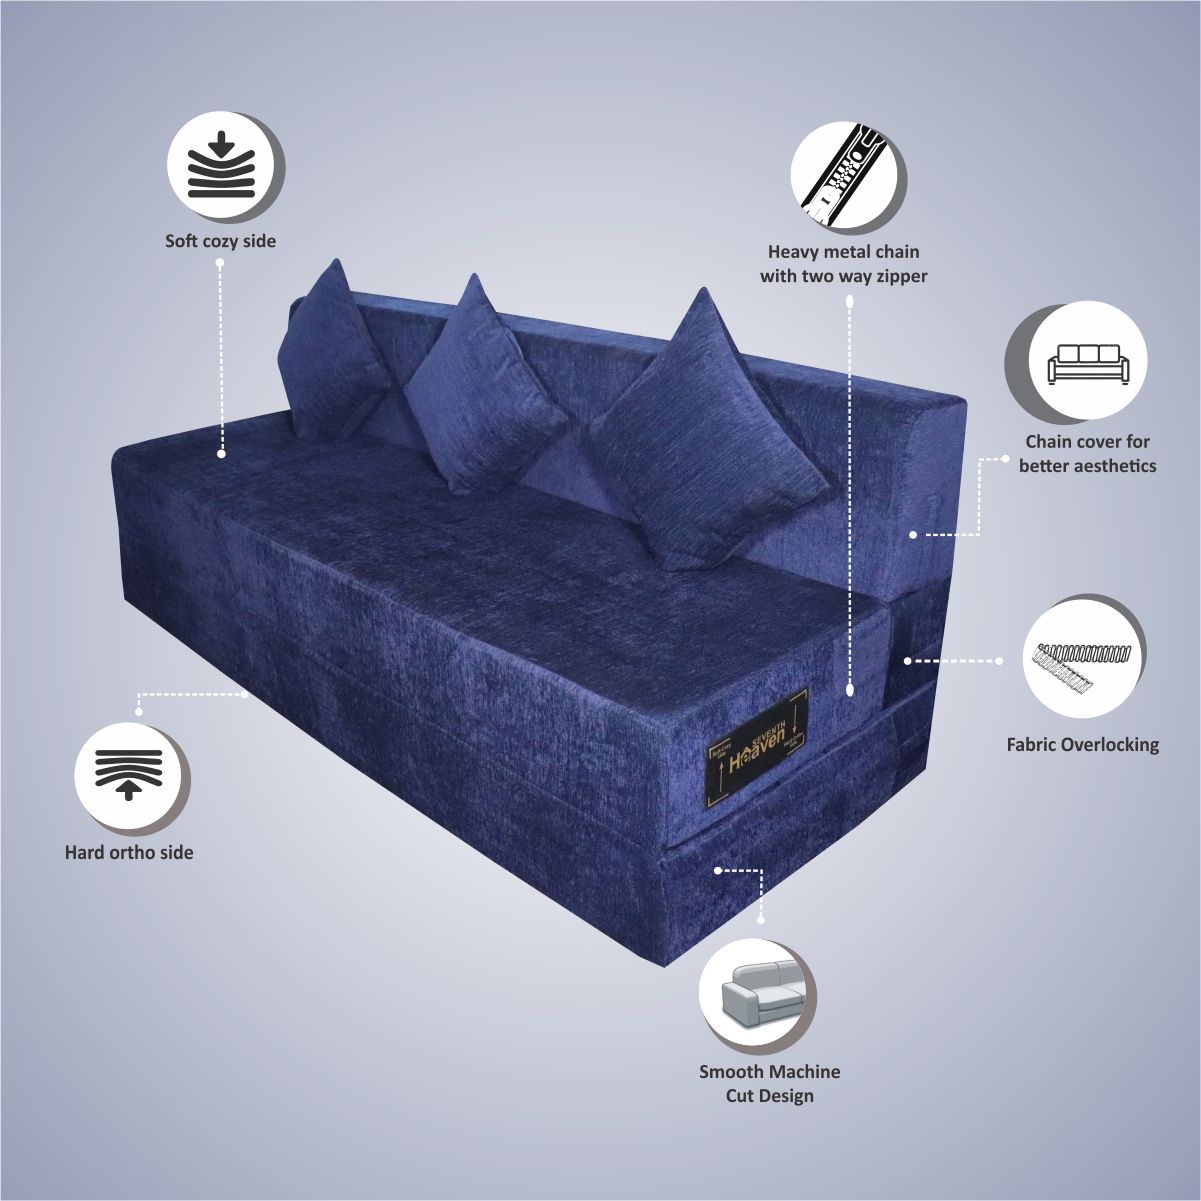 Blue Chenille Molfino Fabric 6×6 Sofa cum Bed with 3 Cushion